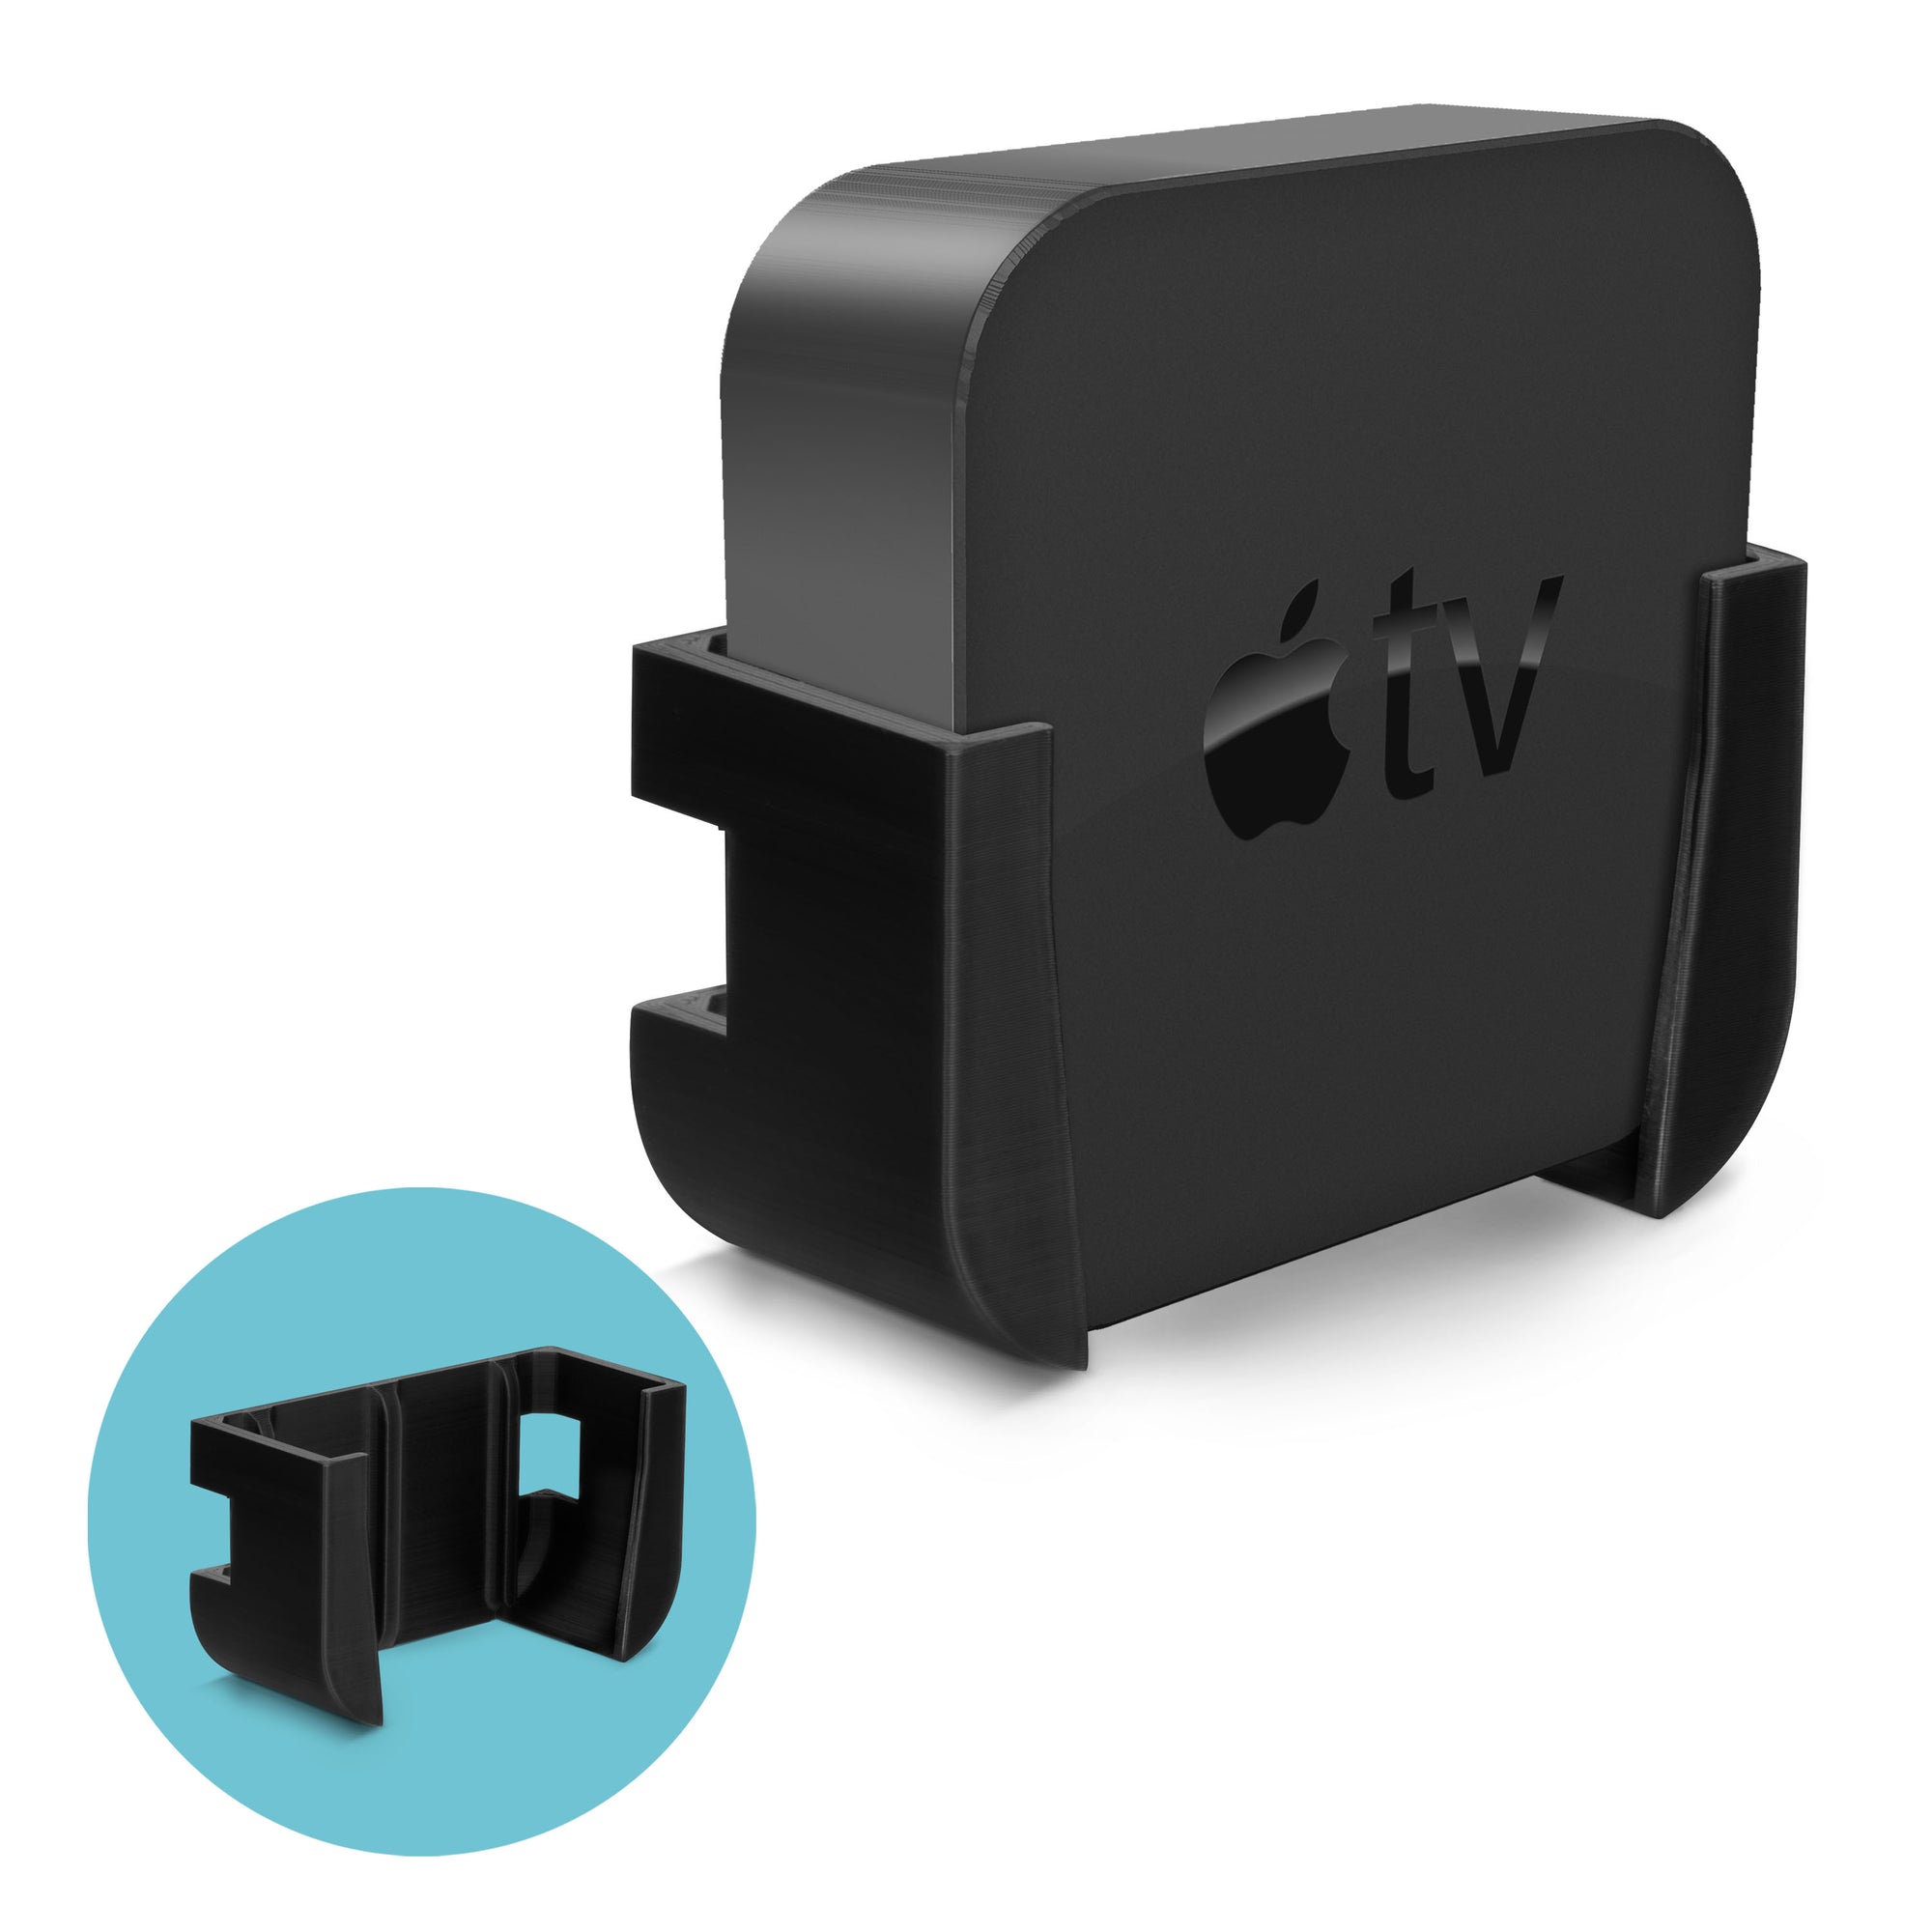 Apple TV 4K & HD Adhesive Wall & TV Mount - No Screws or Mess